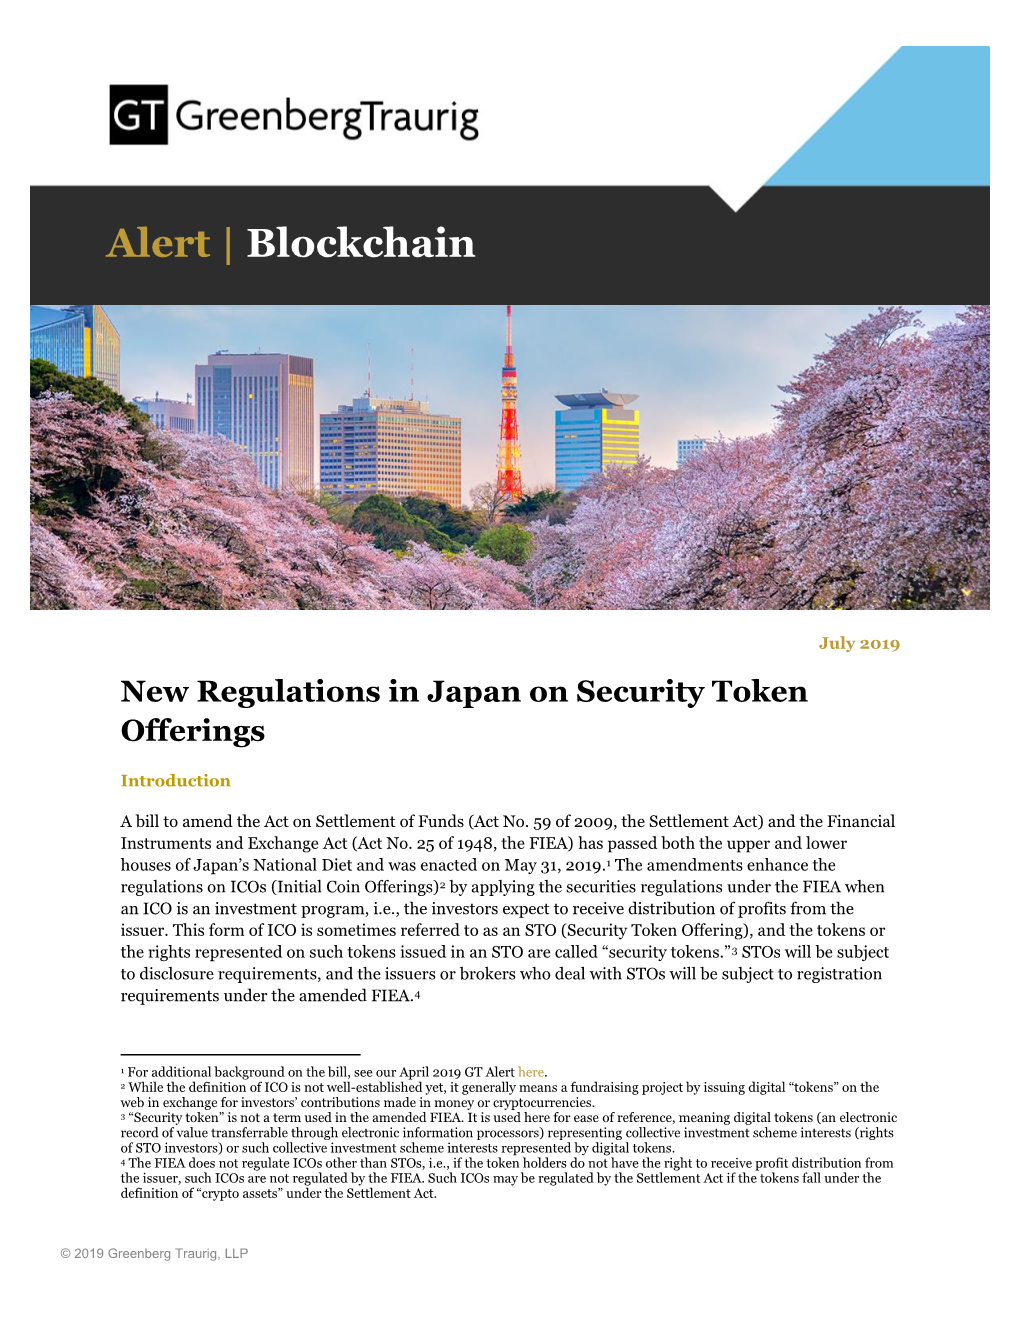 New Regulations in Japan on Security Token Offerings